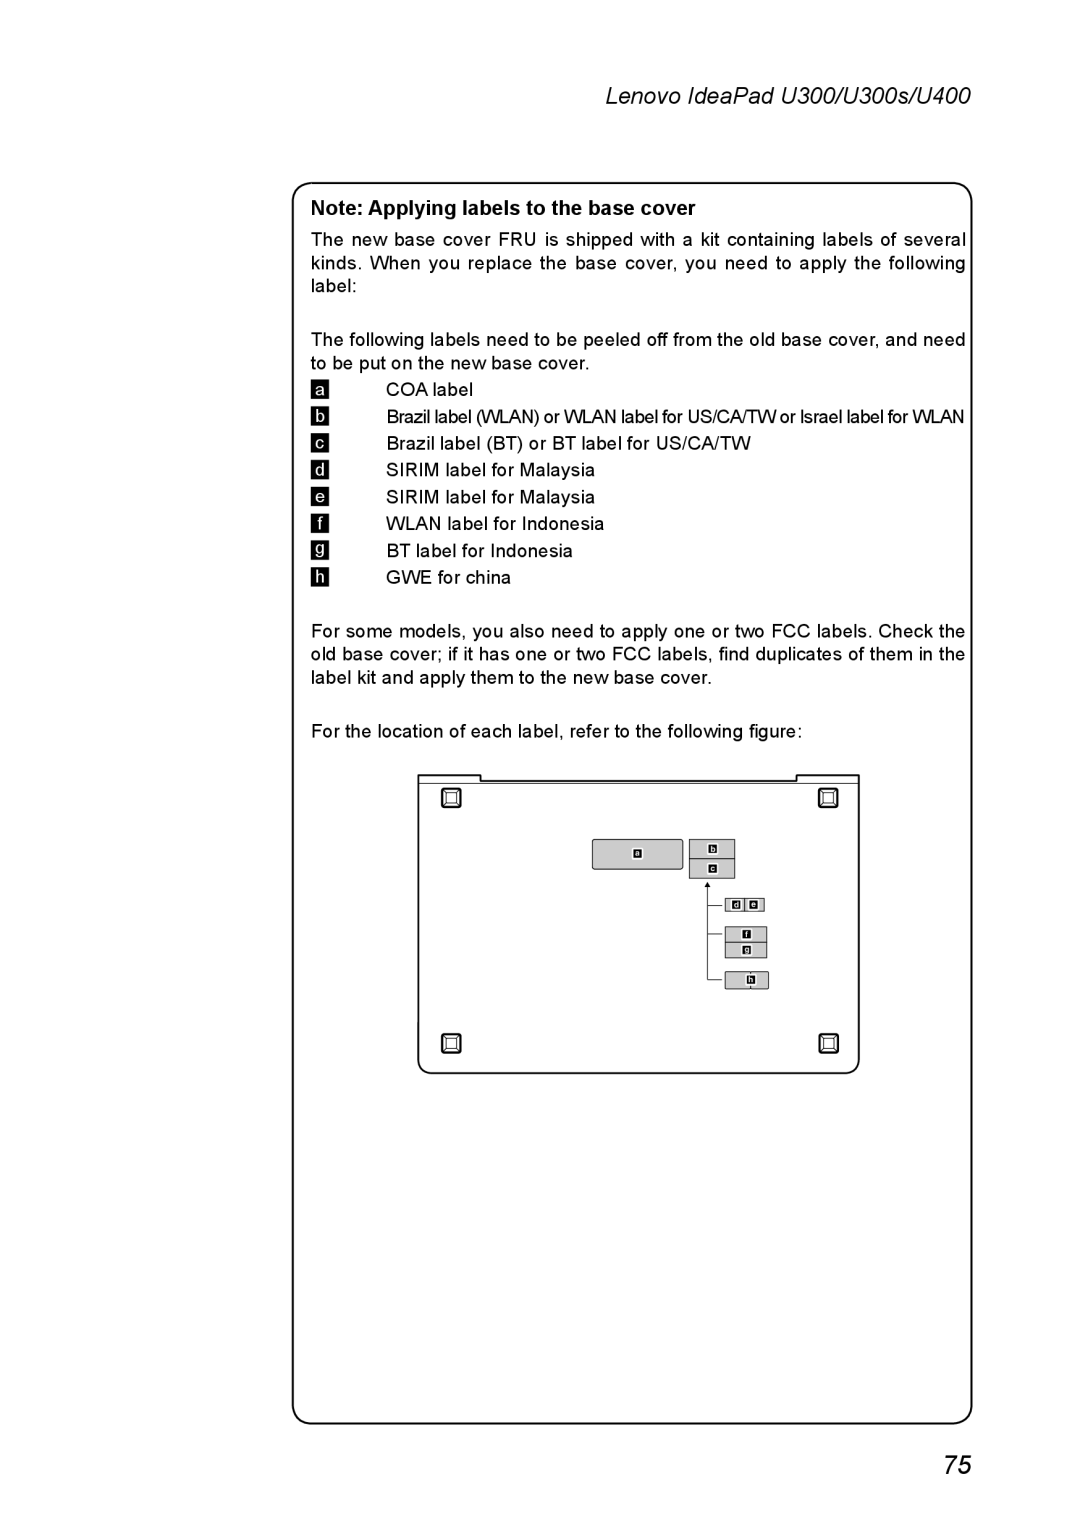 Lenovo U300S manual Lenovo IdeaPad U300/U300s/U400, Note Applying labels to the base cover 